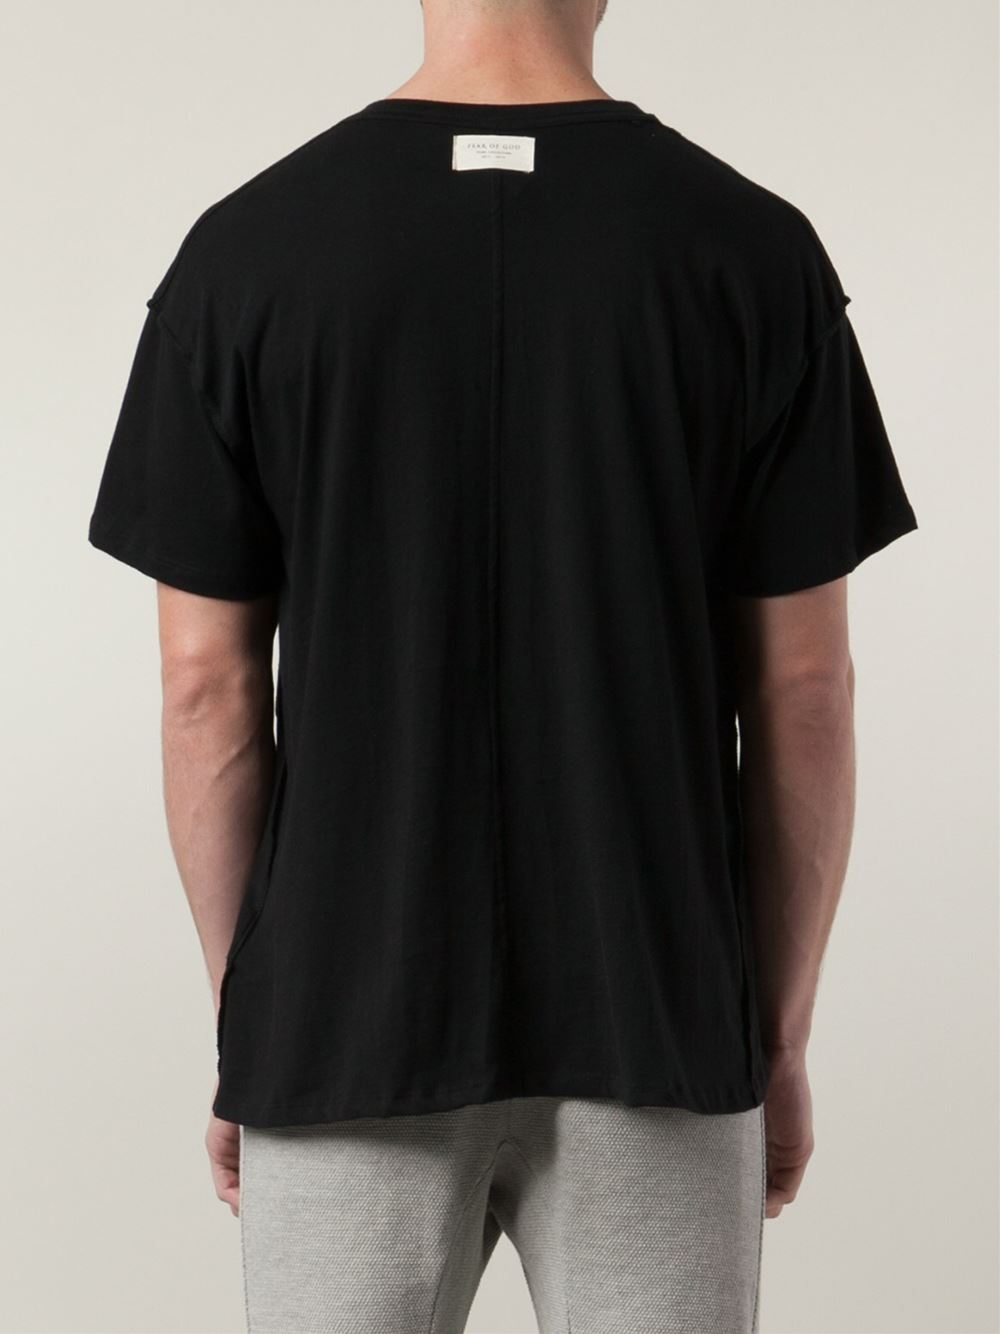 Fear of god Crew-Neck T-Shirt in Black for Men | Lyst